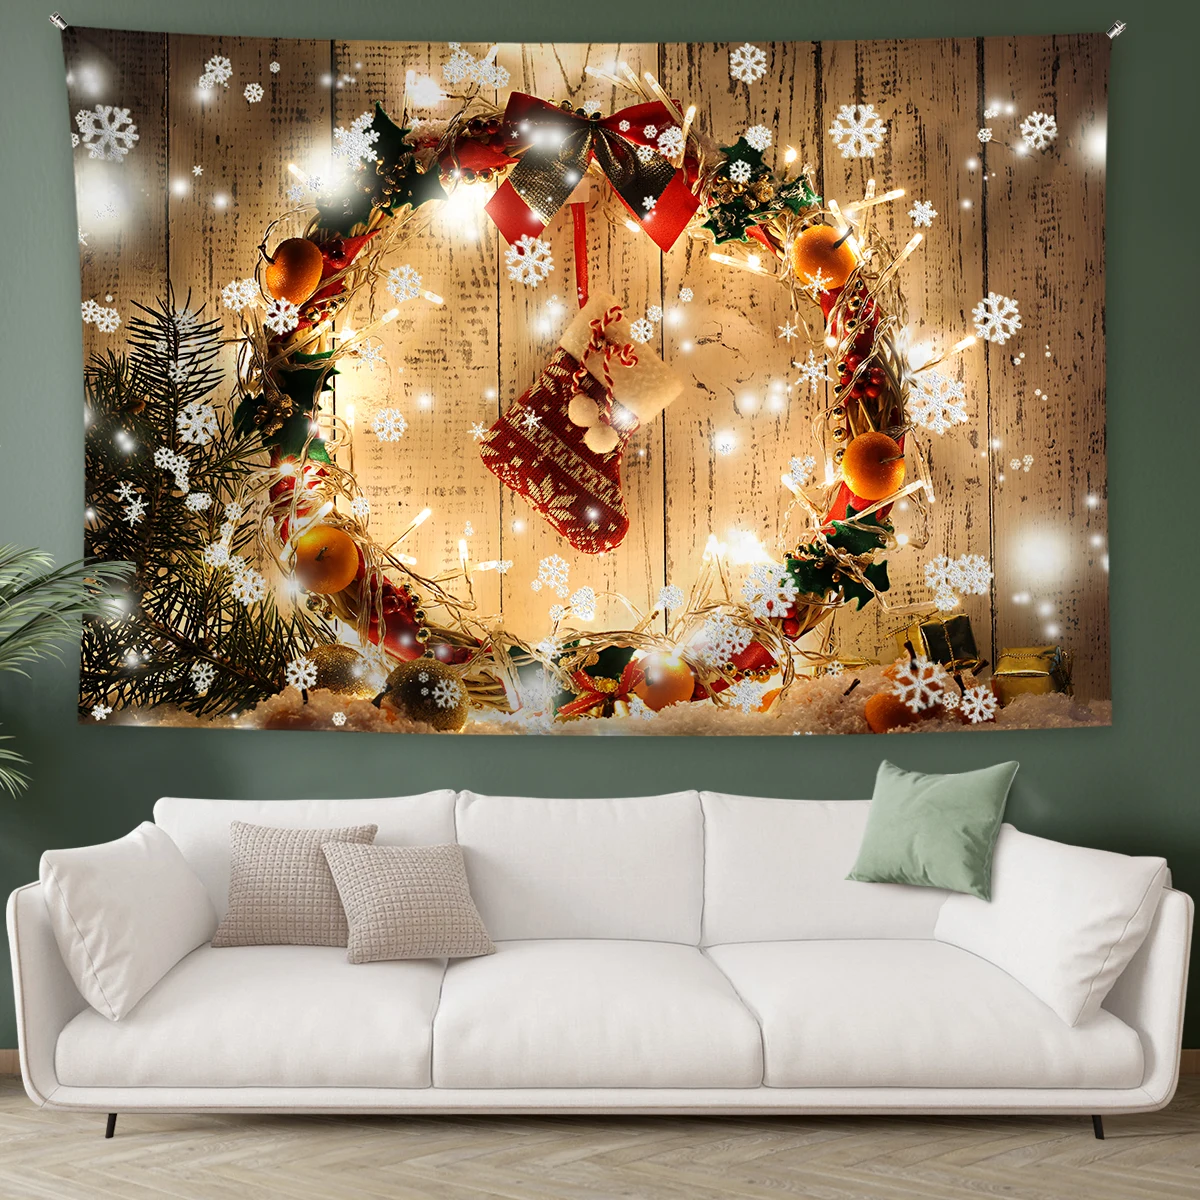 

Home Decor Christmas Tapestry Snowman Santa Tree Socks Gift Fireplace Christmas Printed Tapestry Wall Hanging 230x180cm tapiz